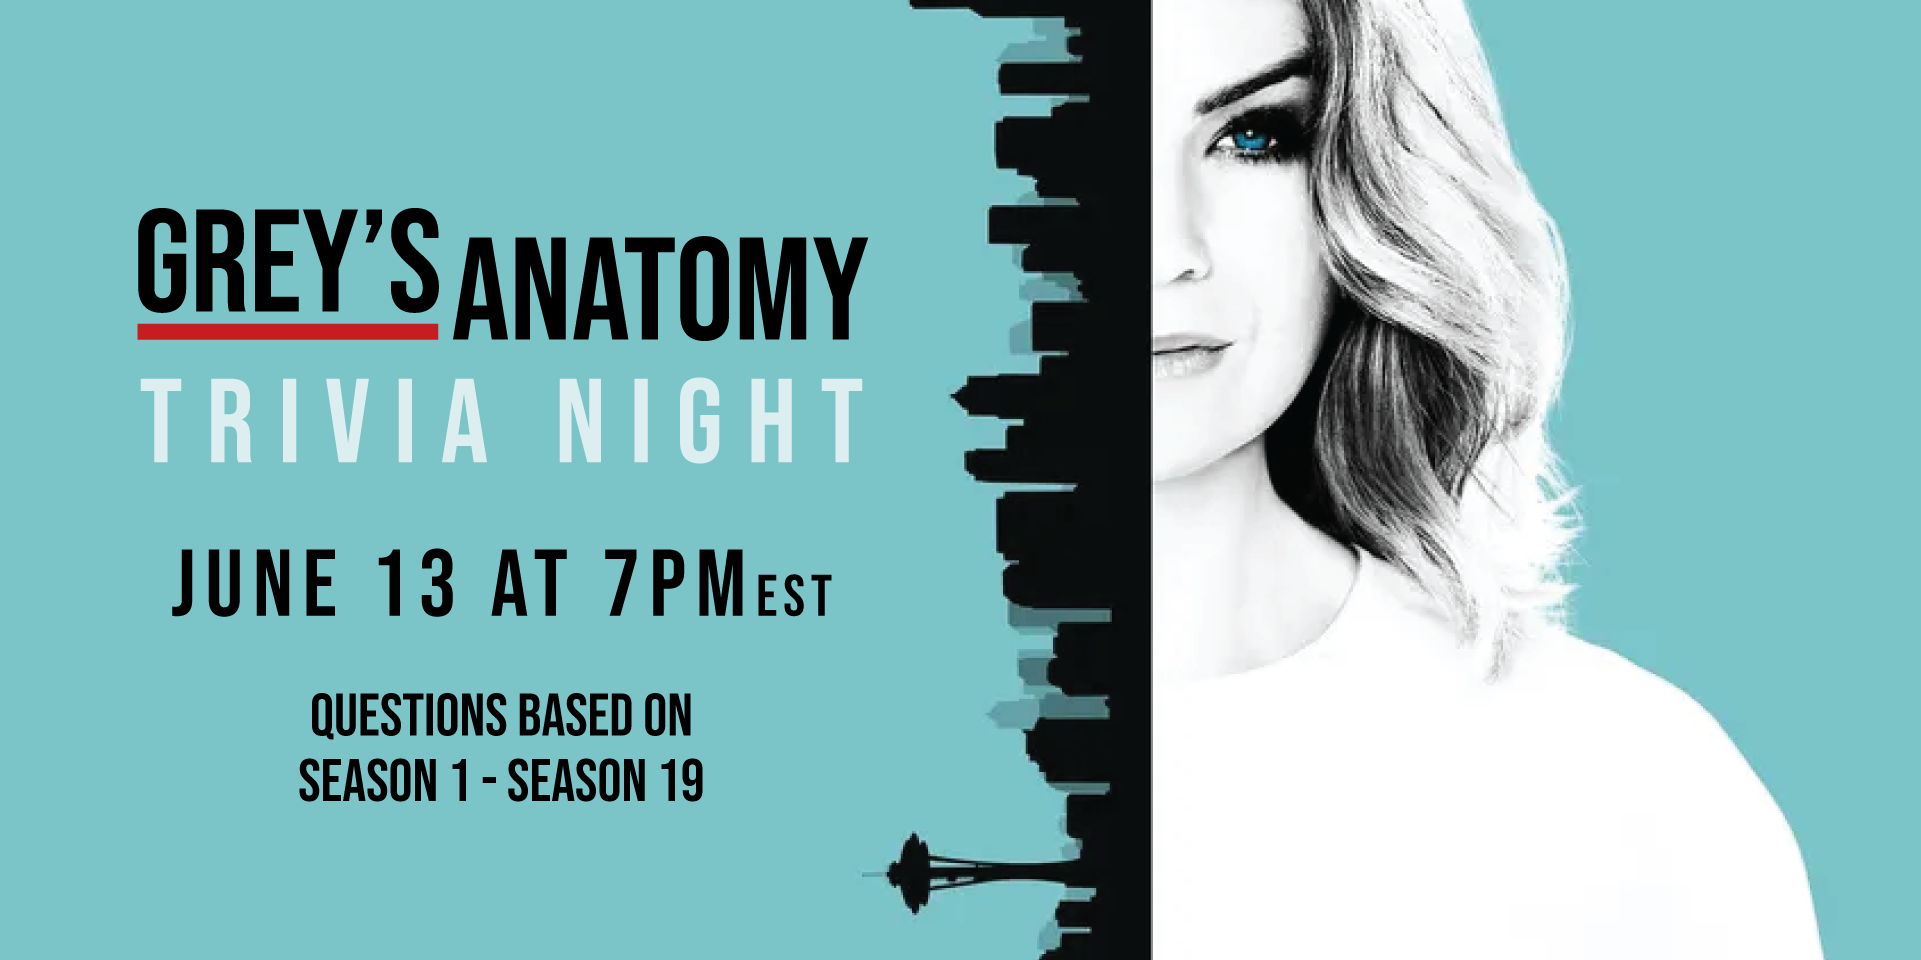 Grey's Anatomy Trivia Night promotional image